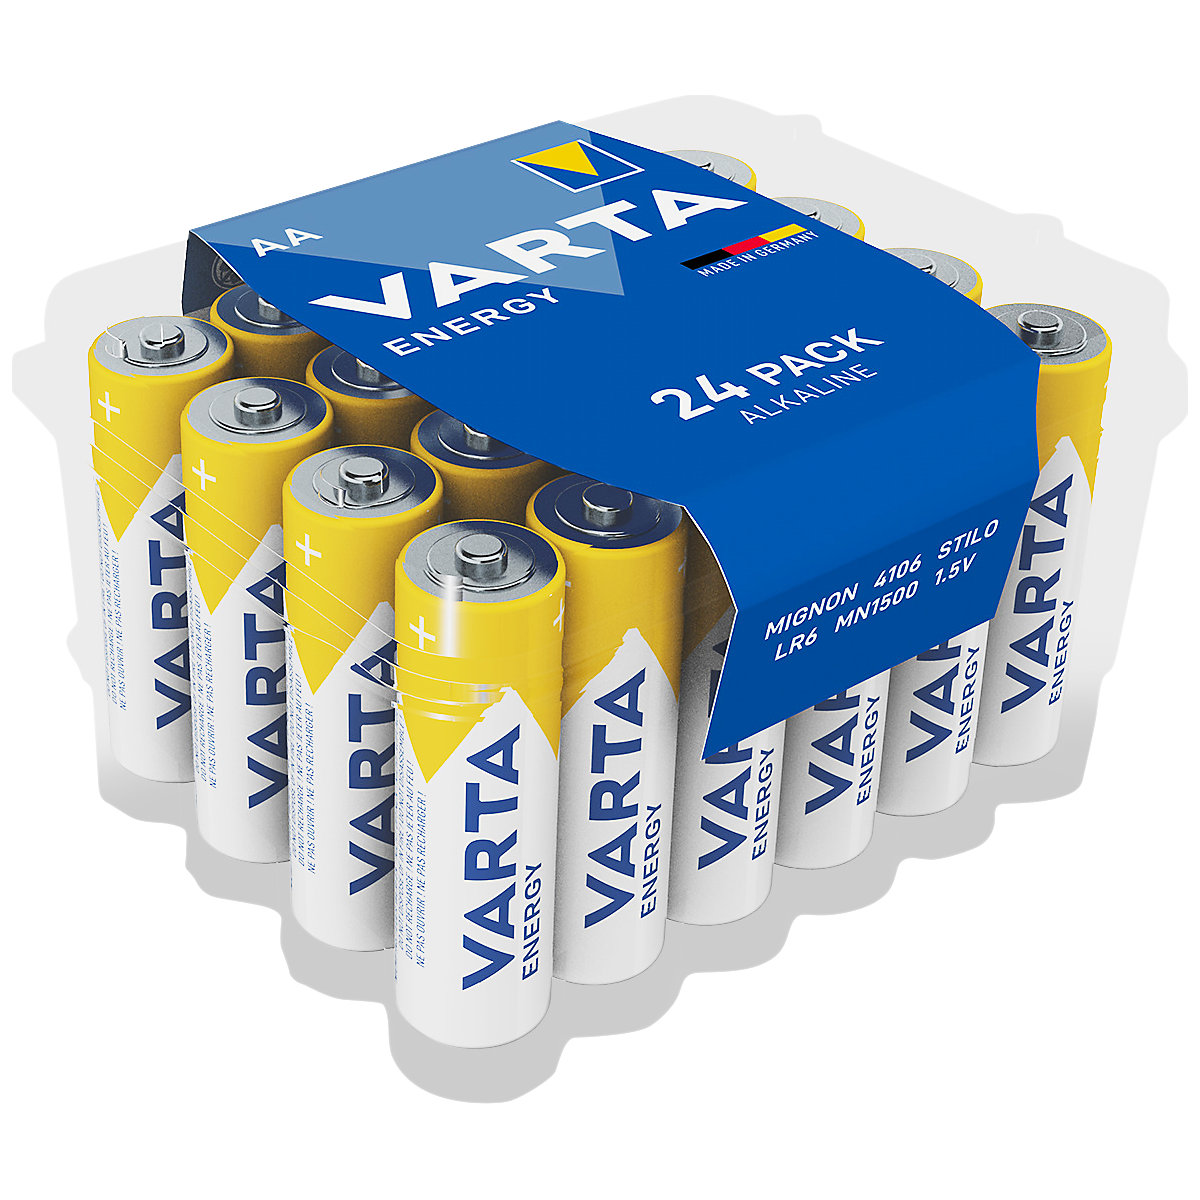 Kosciuszko blad Helder op VARTA – ENERGY-batterij: AA | VINK LISSE